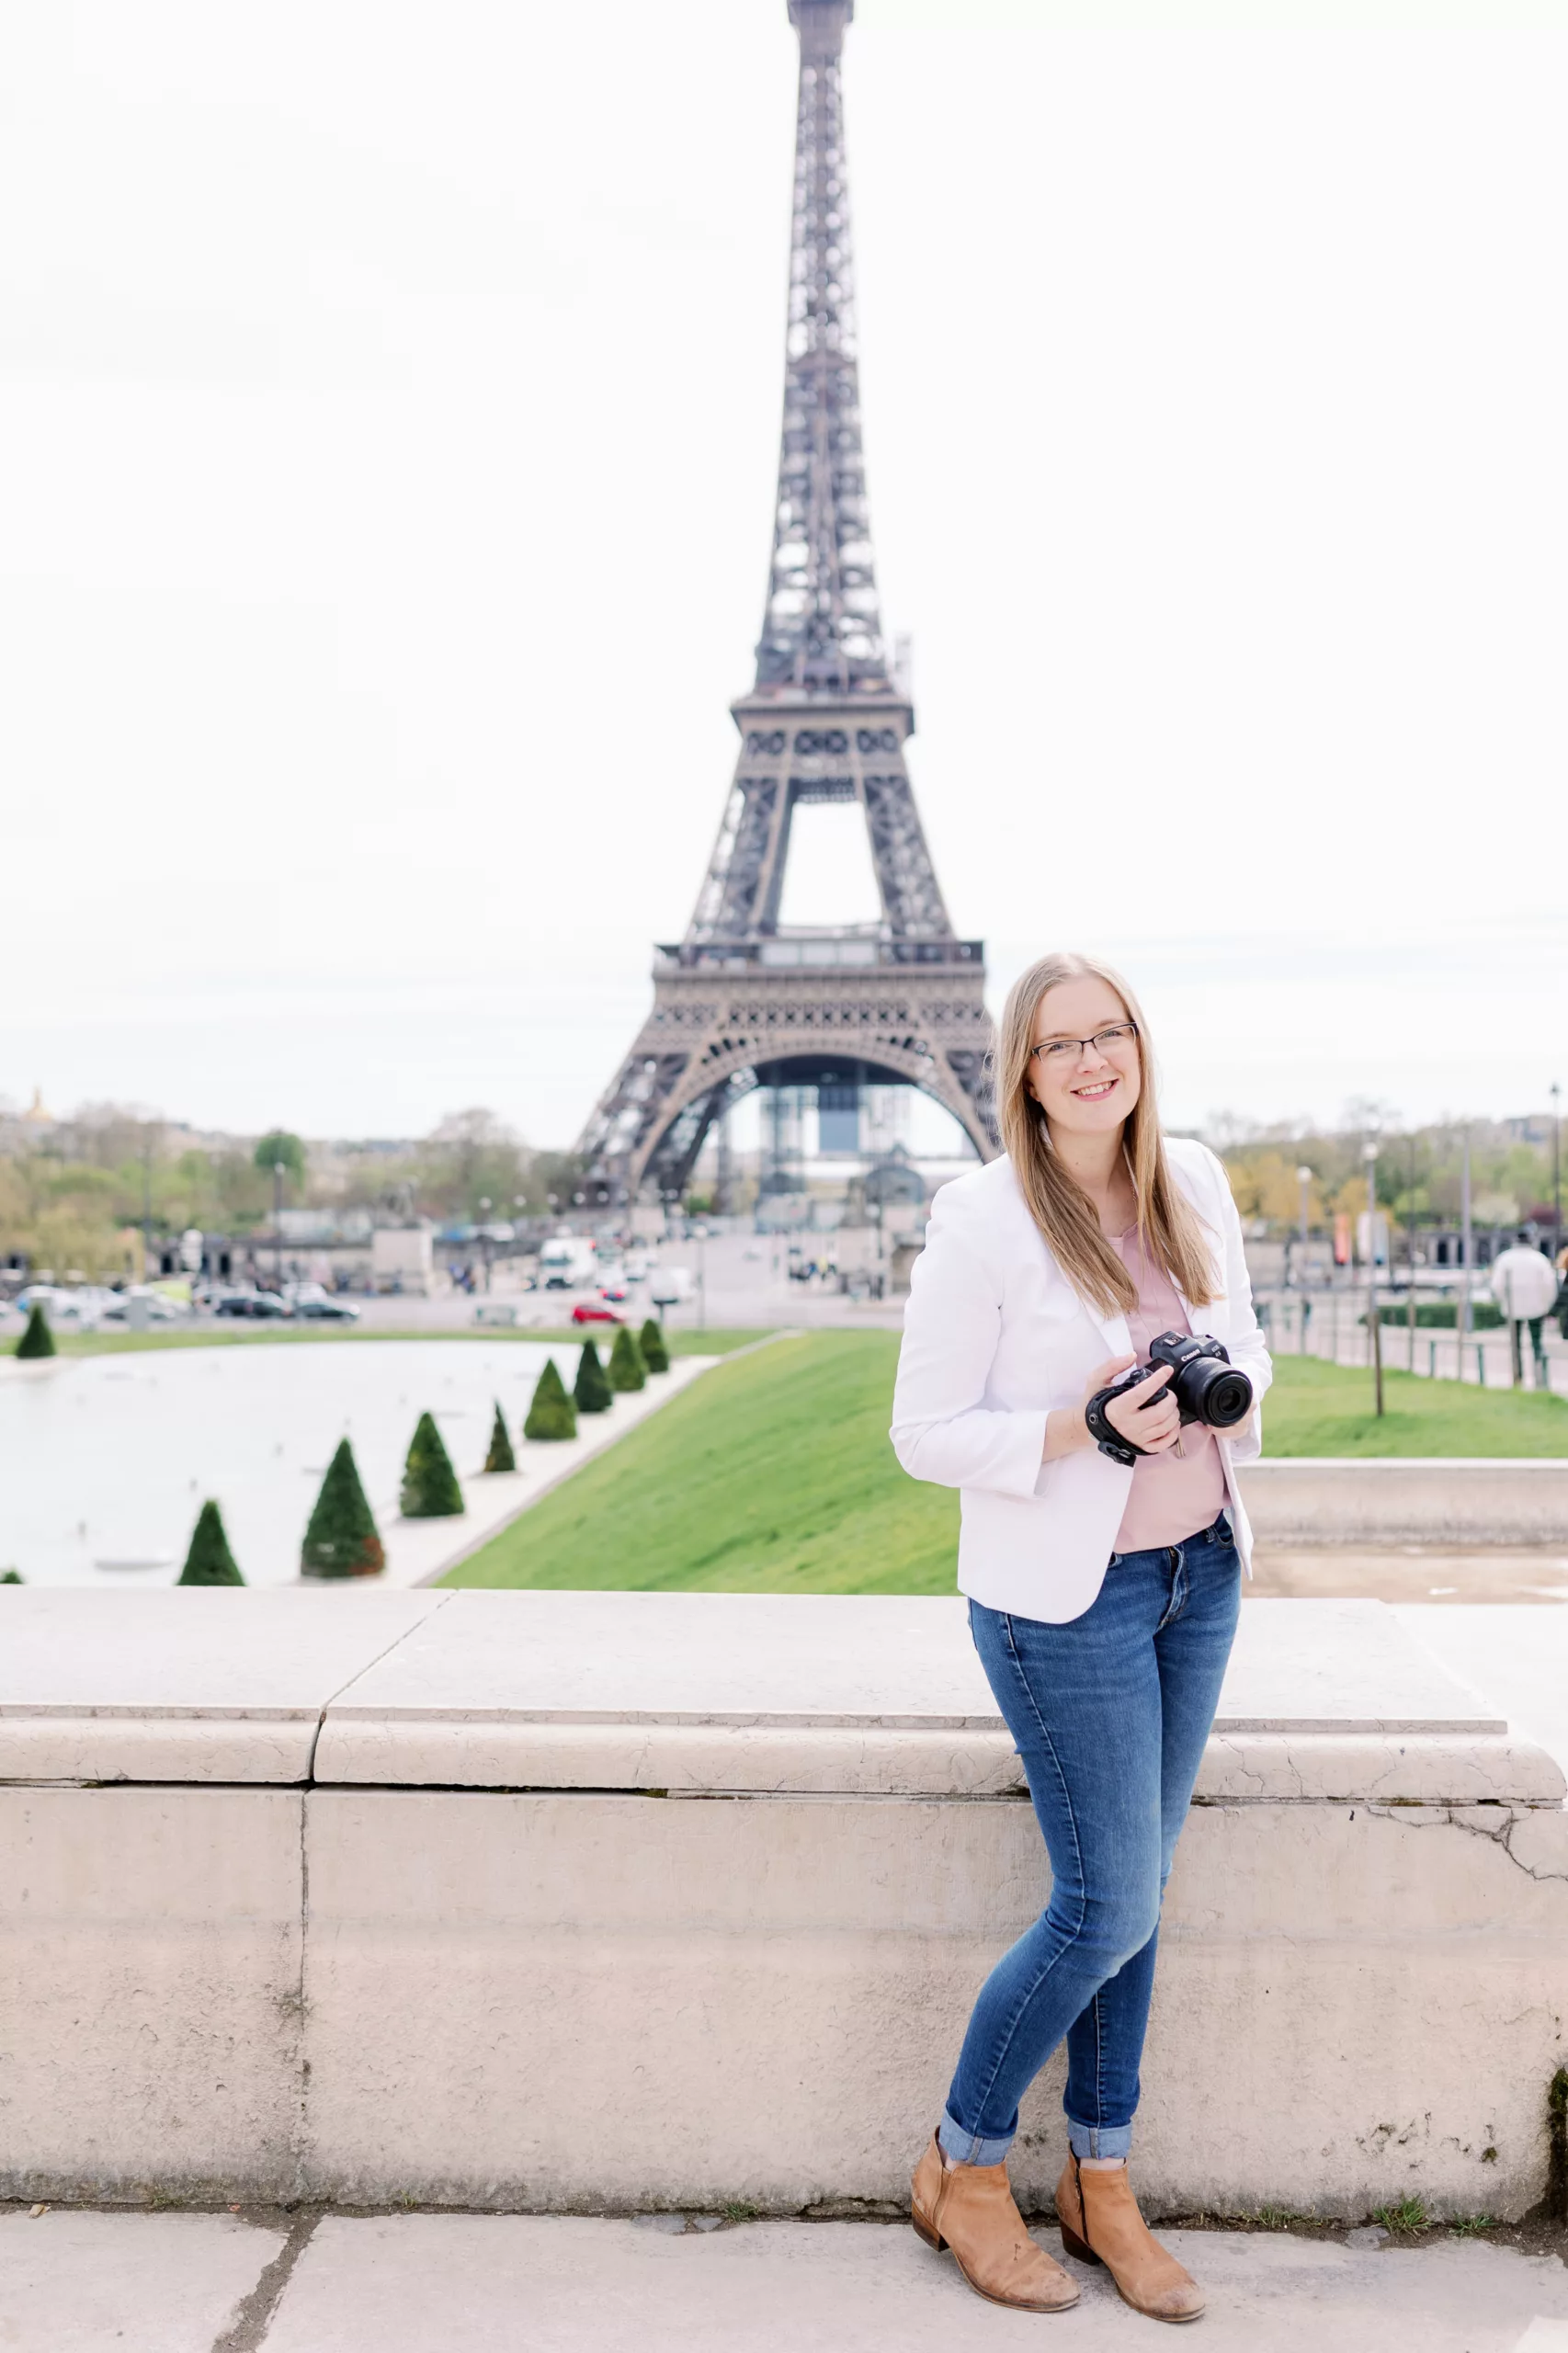 Jennifer Weinman photography professional headshot in Paris France with Eiffel Tower